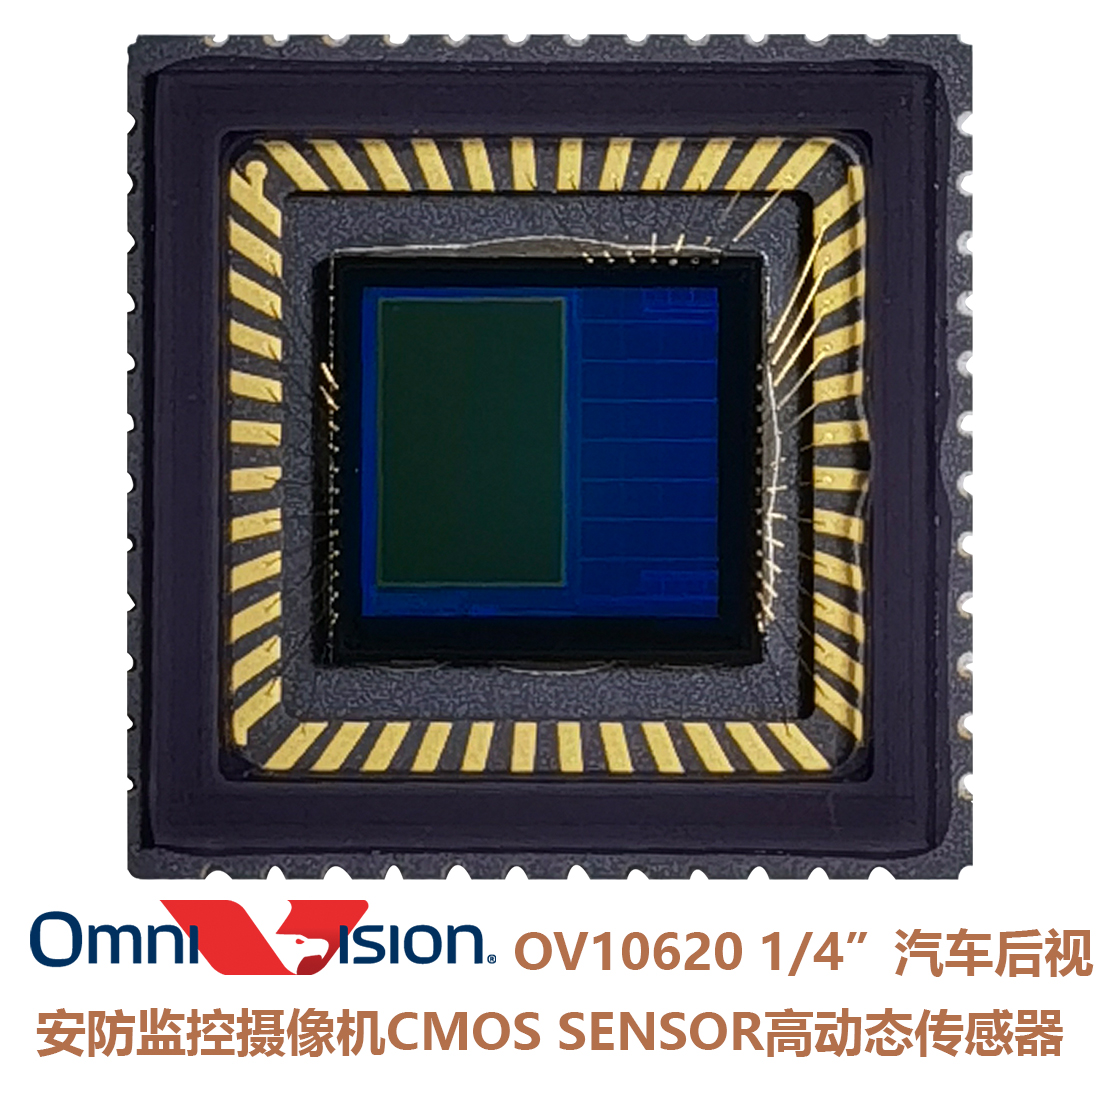 OV10620, 1000nm近红外光谱光敏度,彩色高动态范围(HDR), CMOS Camera Chip，汽车后视和安防监控摄像机图像传感器，768 x 492 (WVGA)图像阵列，6x6μm微米像素CMOS SENSOR,大像素点cmos sensor